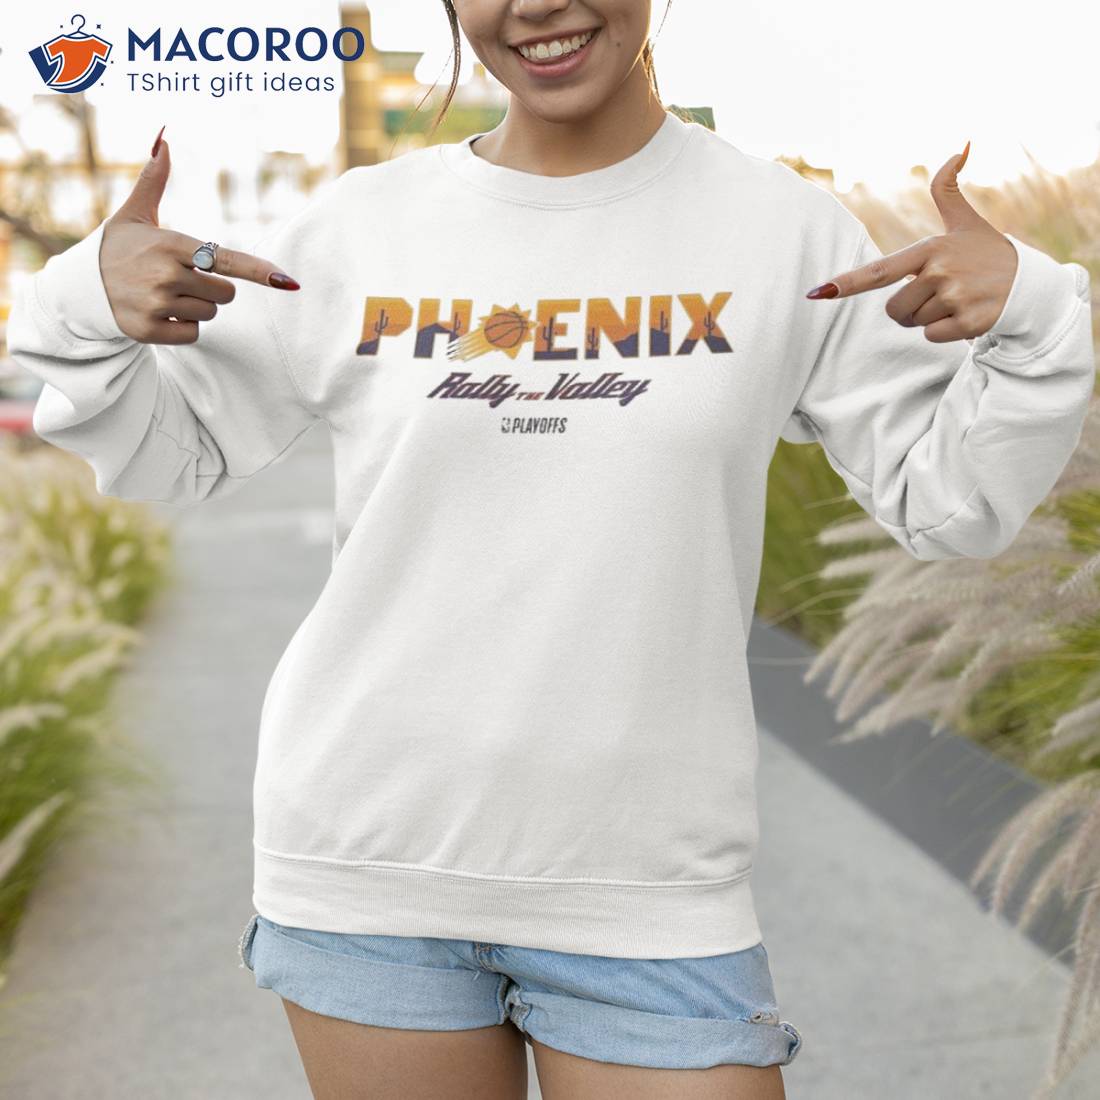 Official Phoenix Suns 2023 Playoffs Rally the Valley Bingham T-Shirt